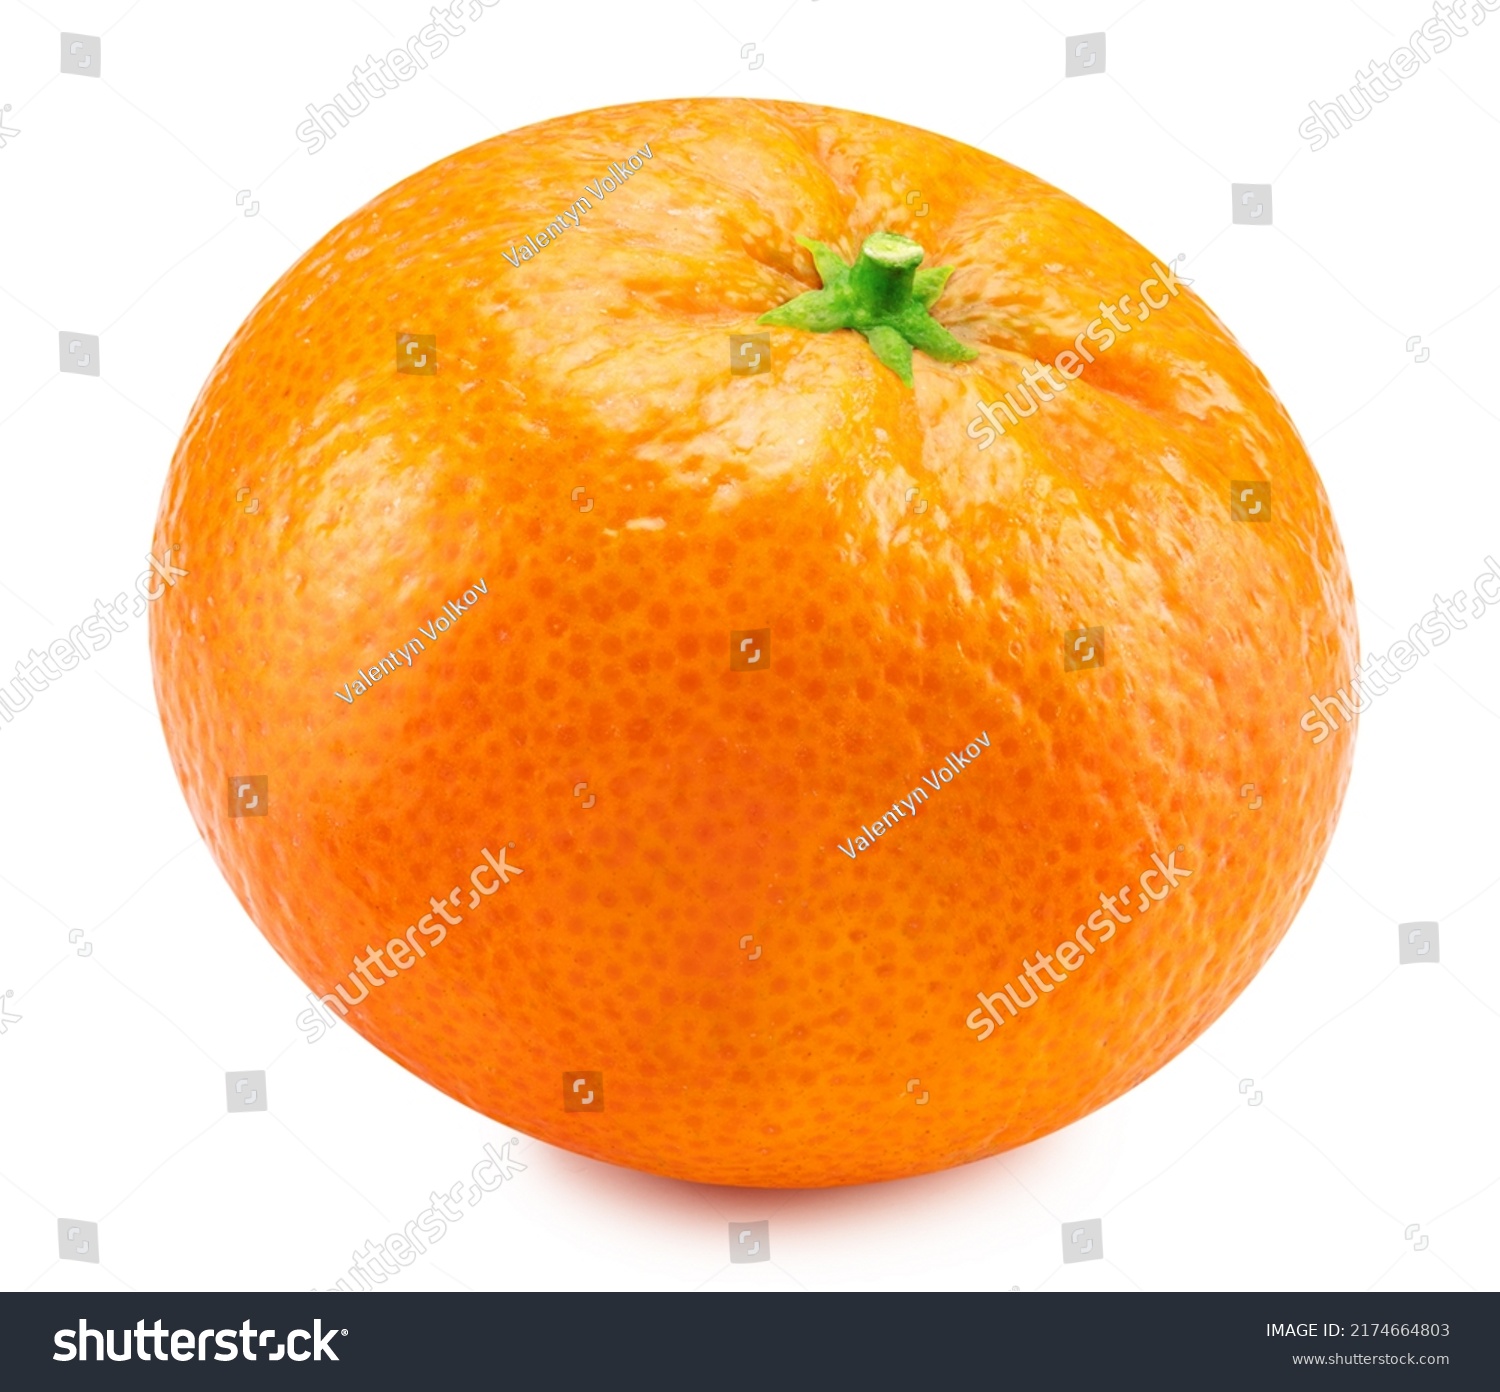 Ripe tangerine fruit isolated on a white background. Organic tangerines fruits. #2174664803